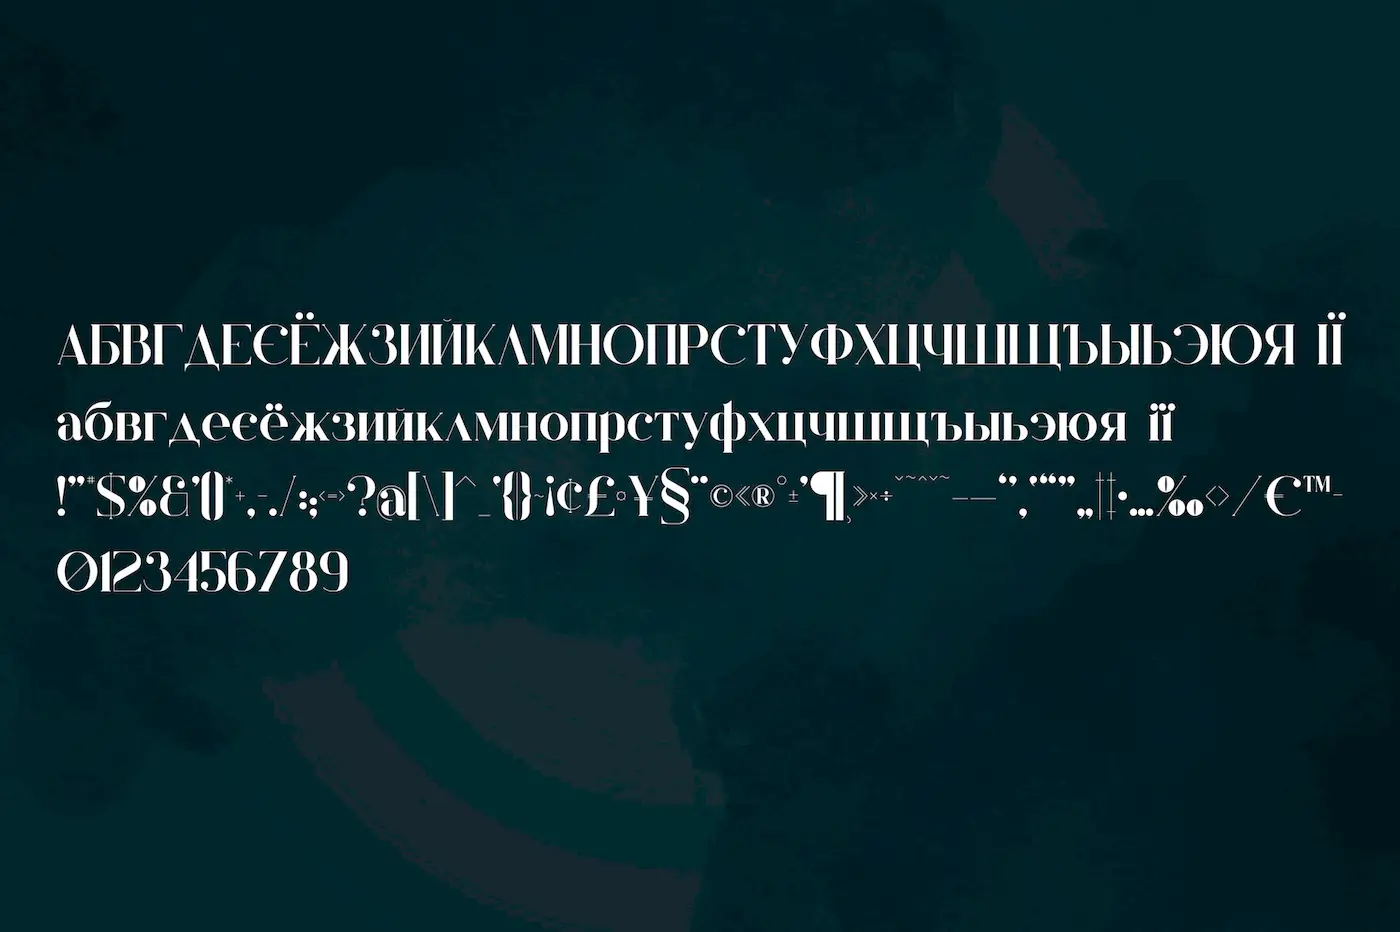 Шрифт Quilin Cyrillic